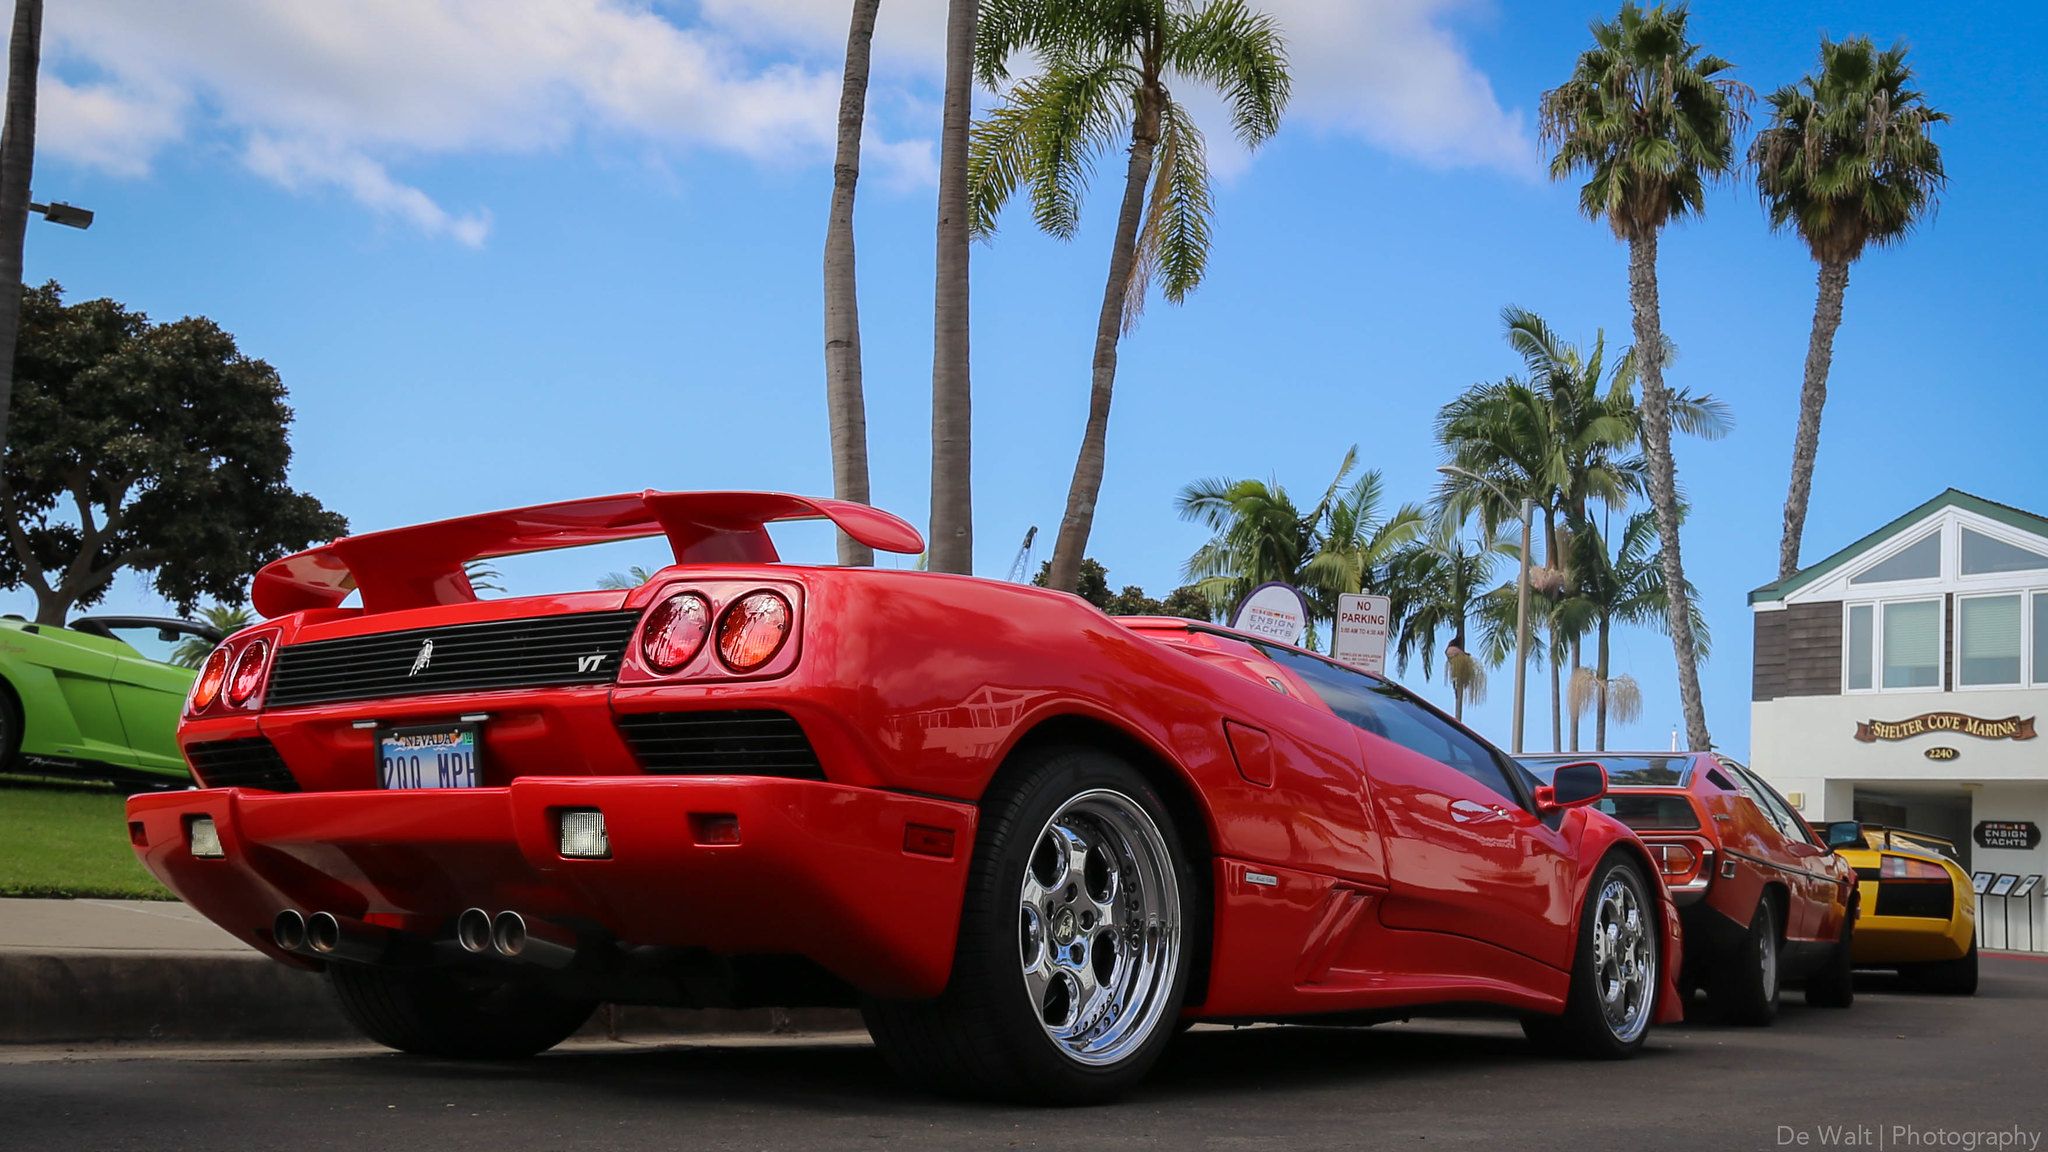 Red Lamborghini Diablo in Tropical setting